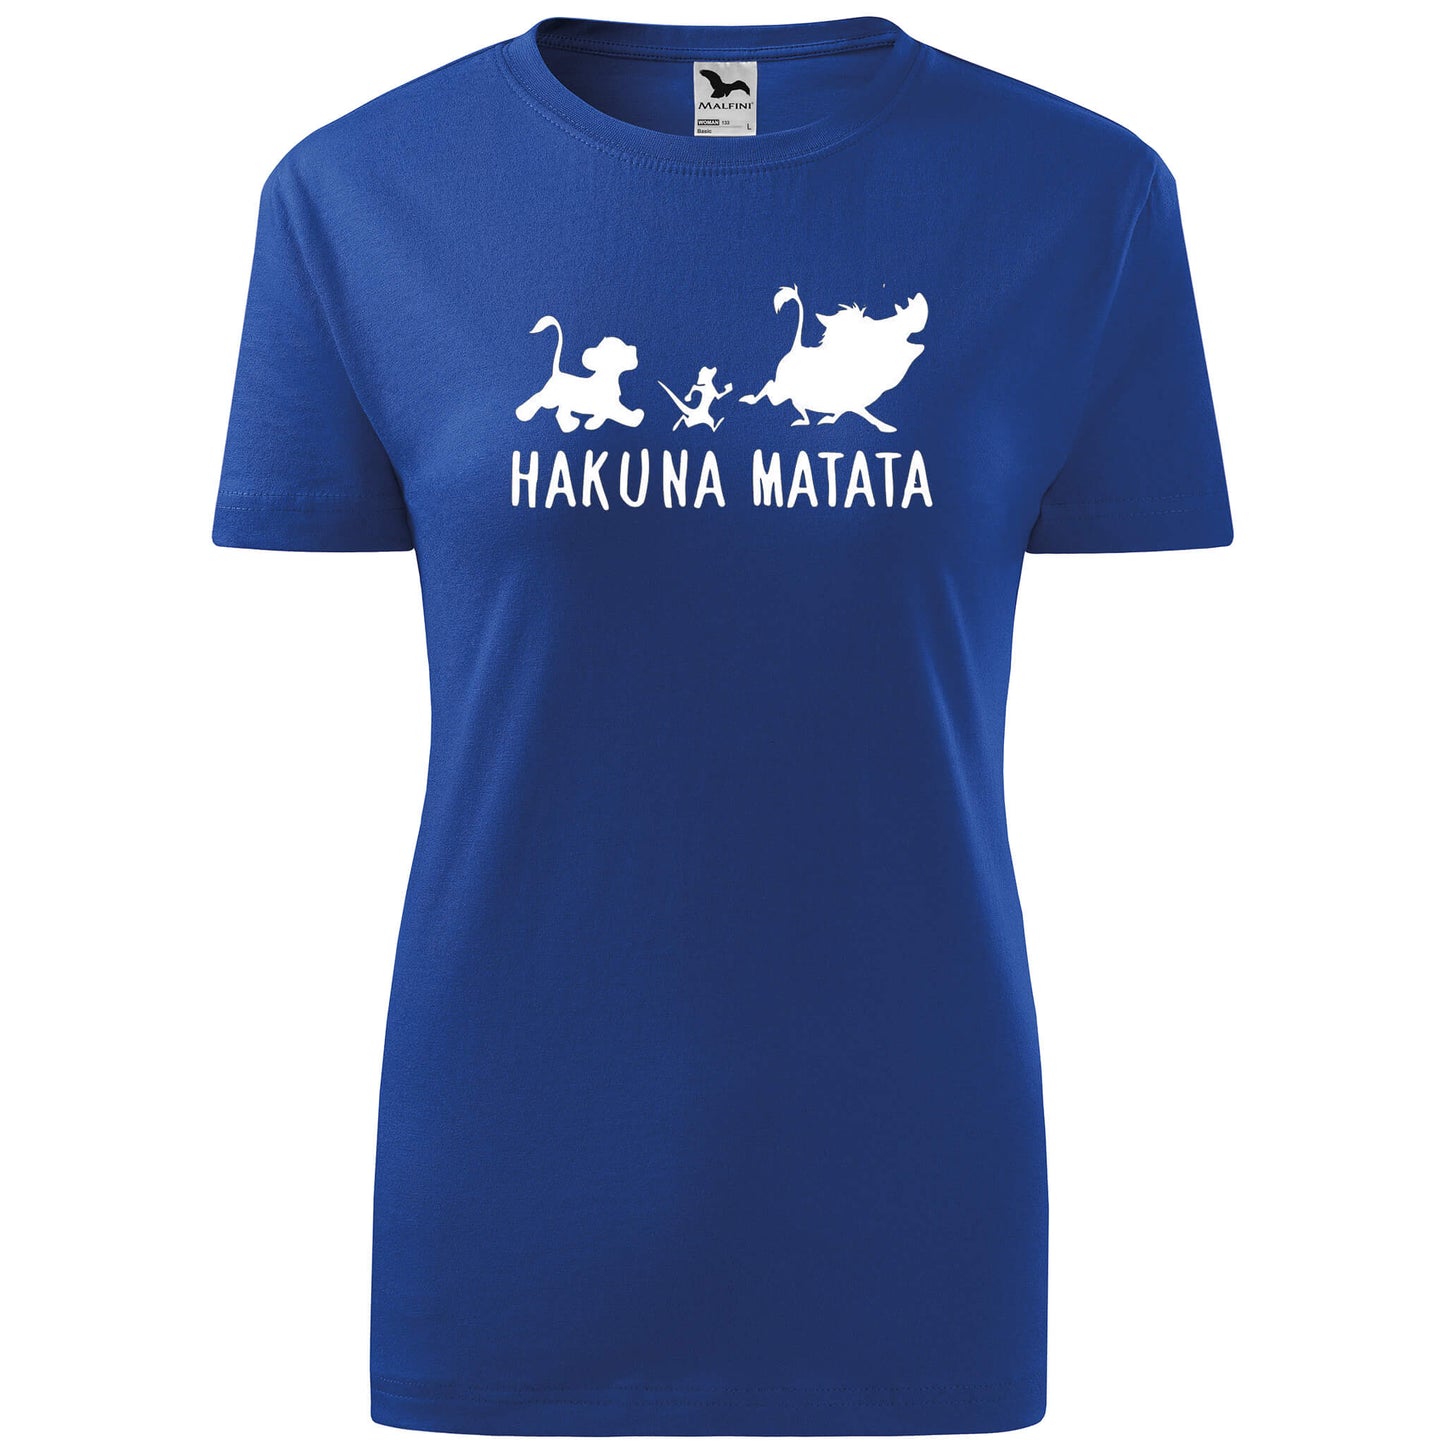 T-shirt - Hakuna matata - rvdesignprint